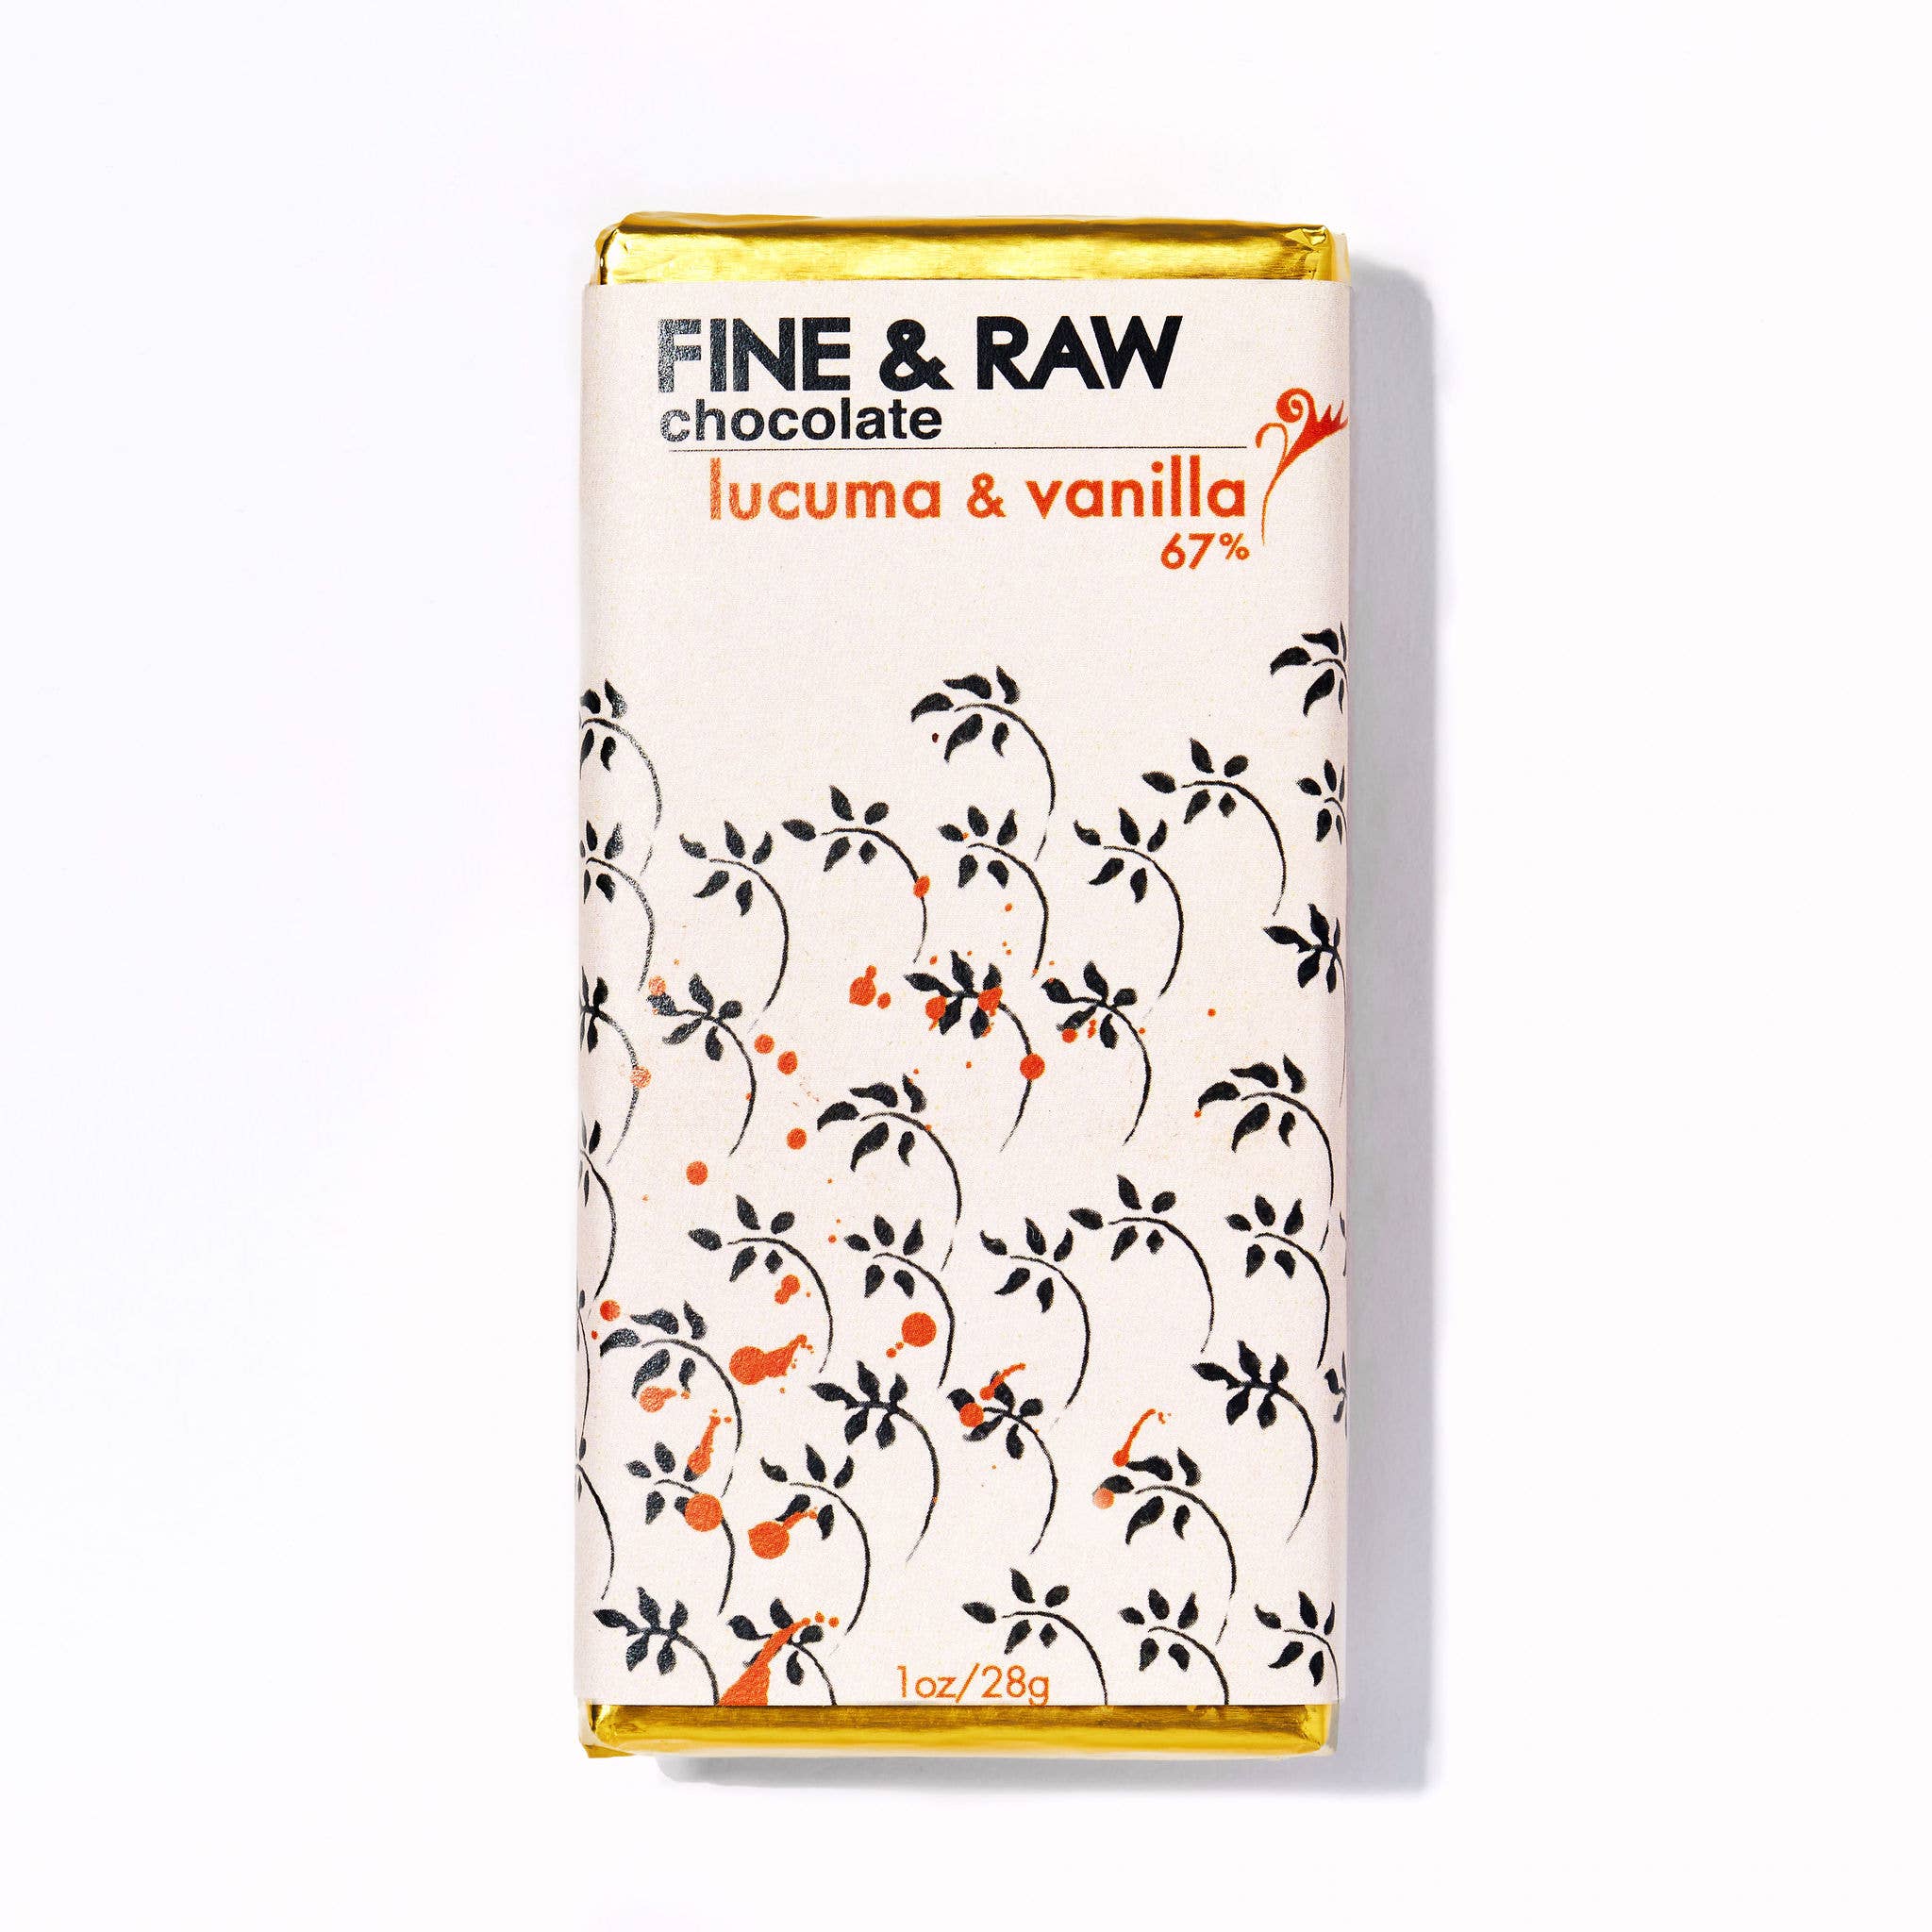 FINE & RAW - 1oz Lucuma & Vanilla Chocolate Bar (67% cacao)